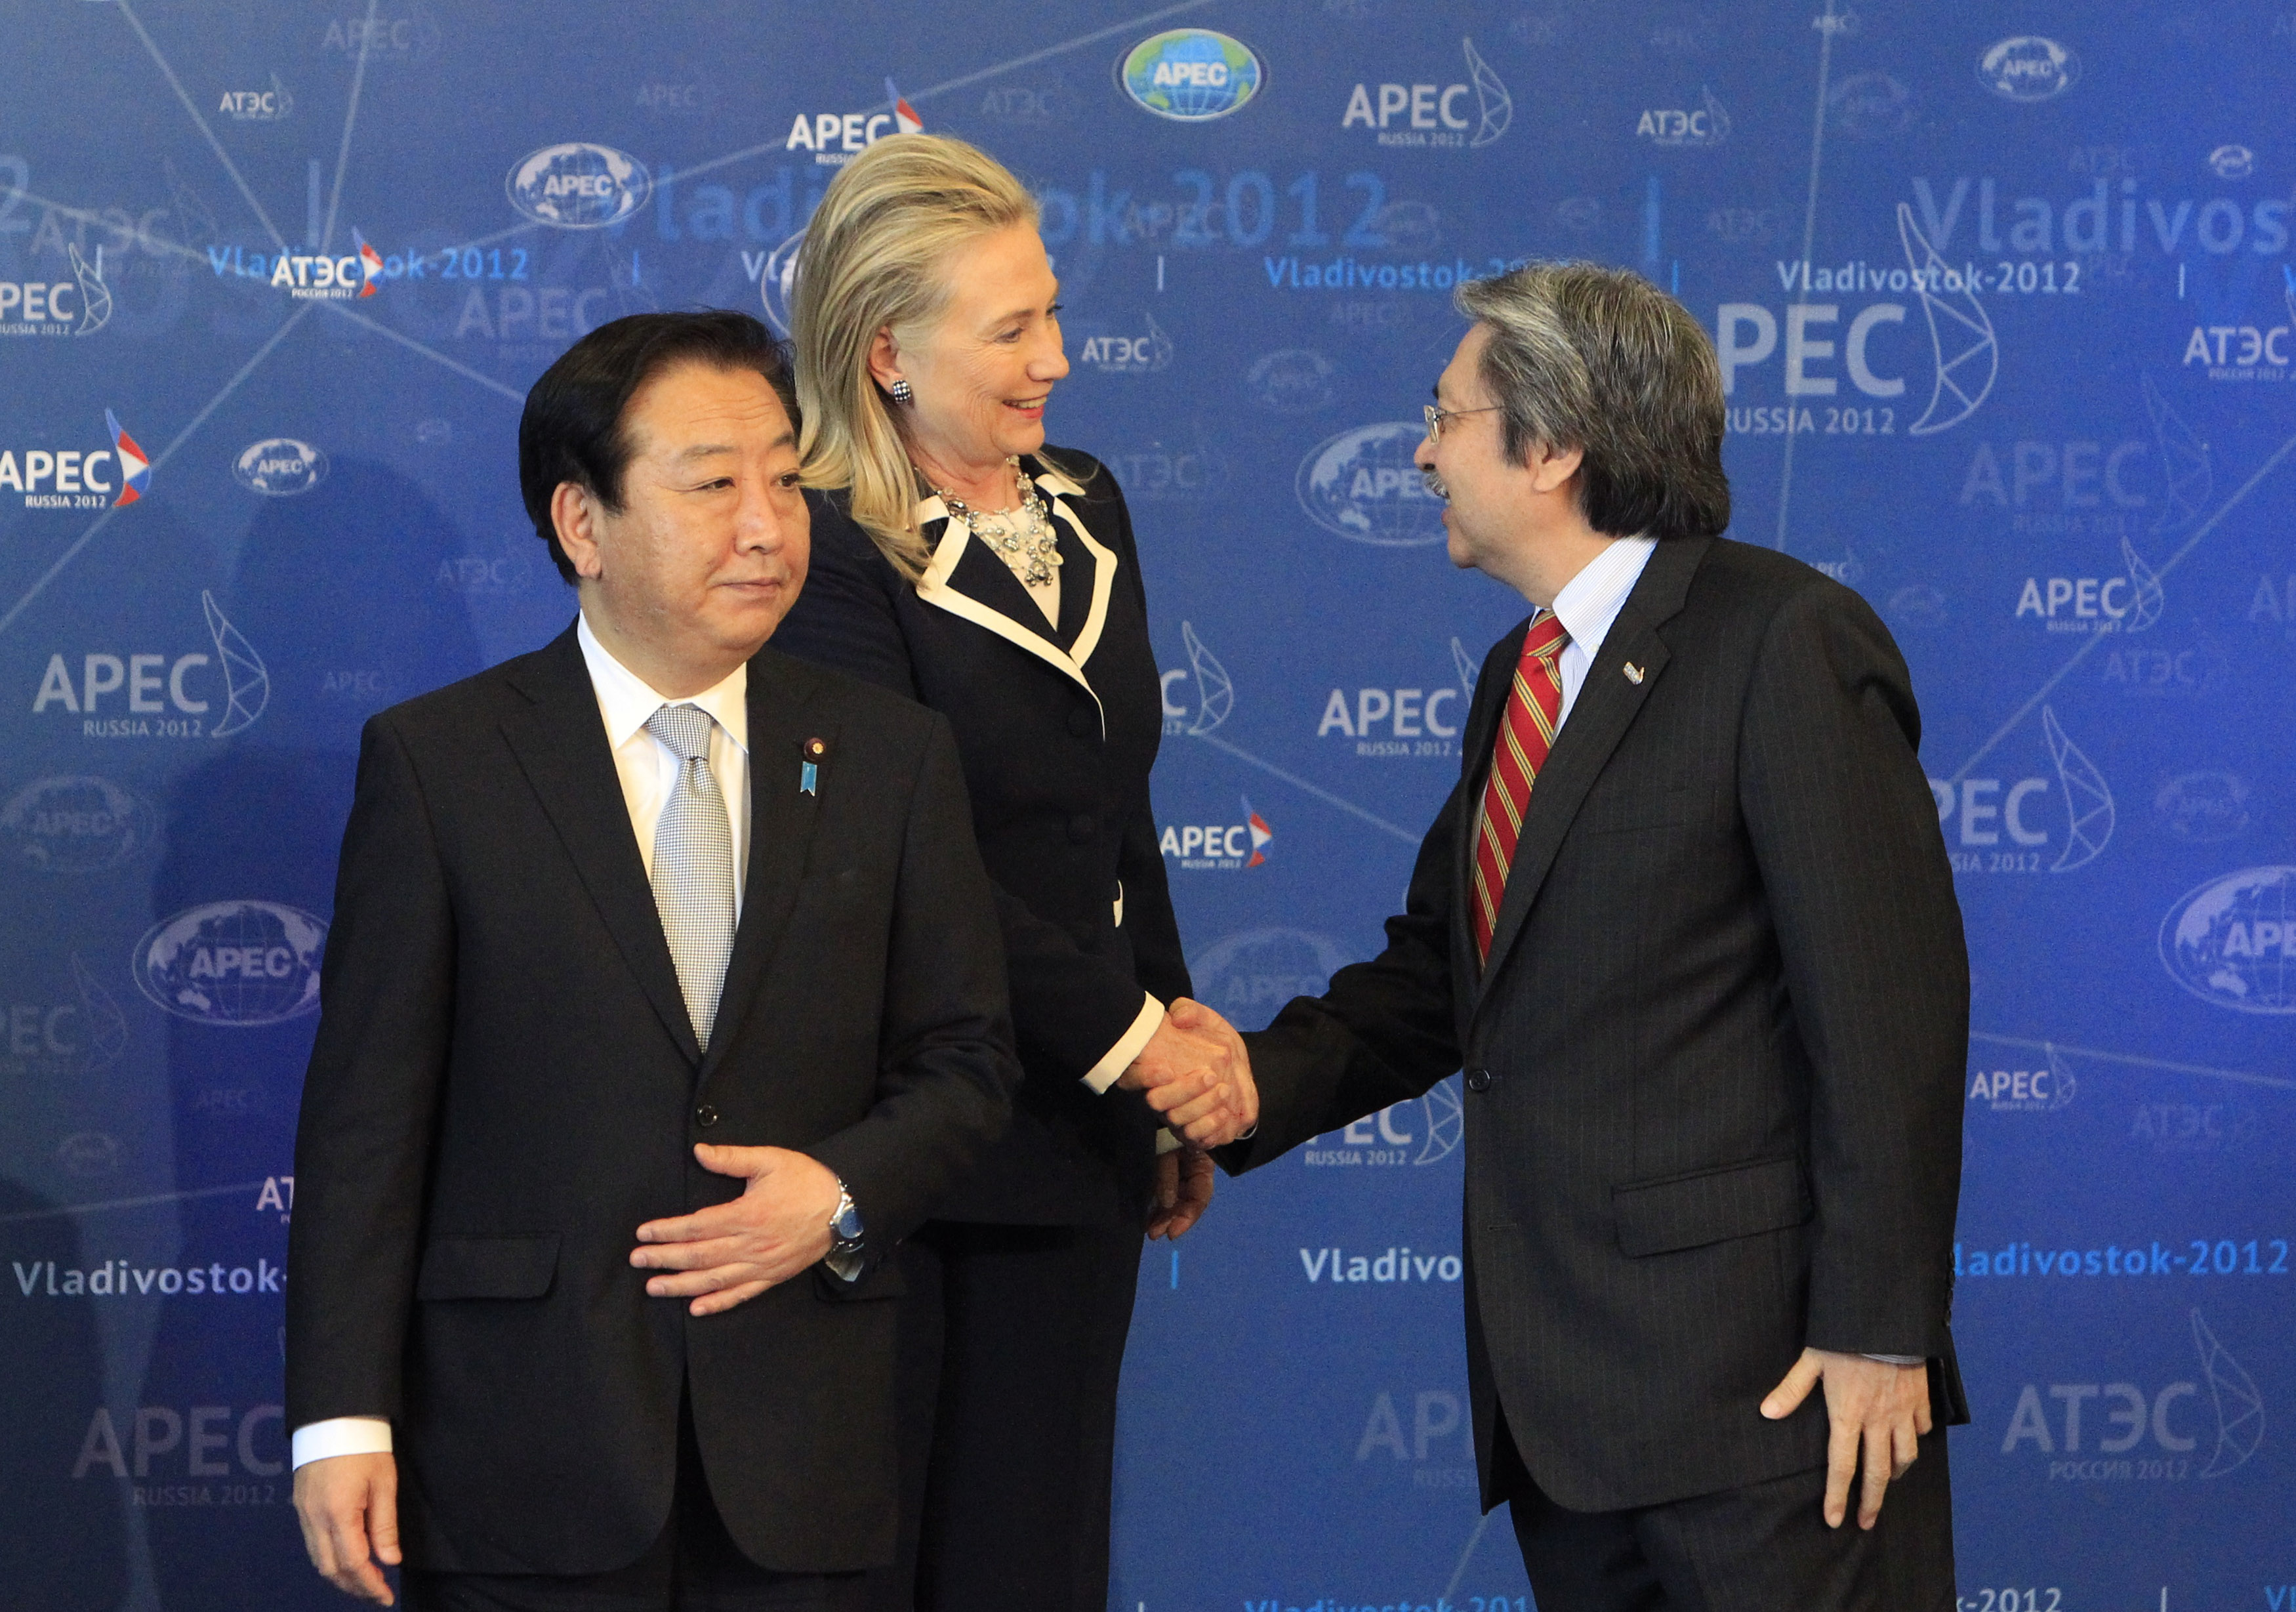 U.S. Secretary of State Hillary Clinton shakes hands with Hong Kong's Financial Secretary John Tsang as Japan's Prime Minister Yoshihiko Noda looks on at the Asia-Pacific Economic Cooperation Summit in Vladivostok, Russia, on Sept. 9, 2012 (Sergei Karpukhin—Reuters)